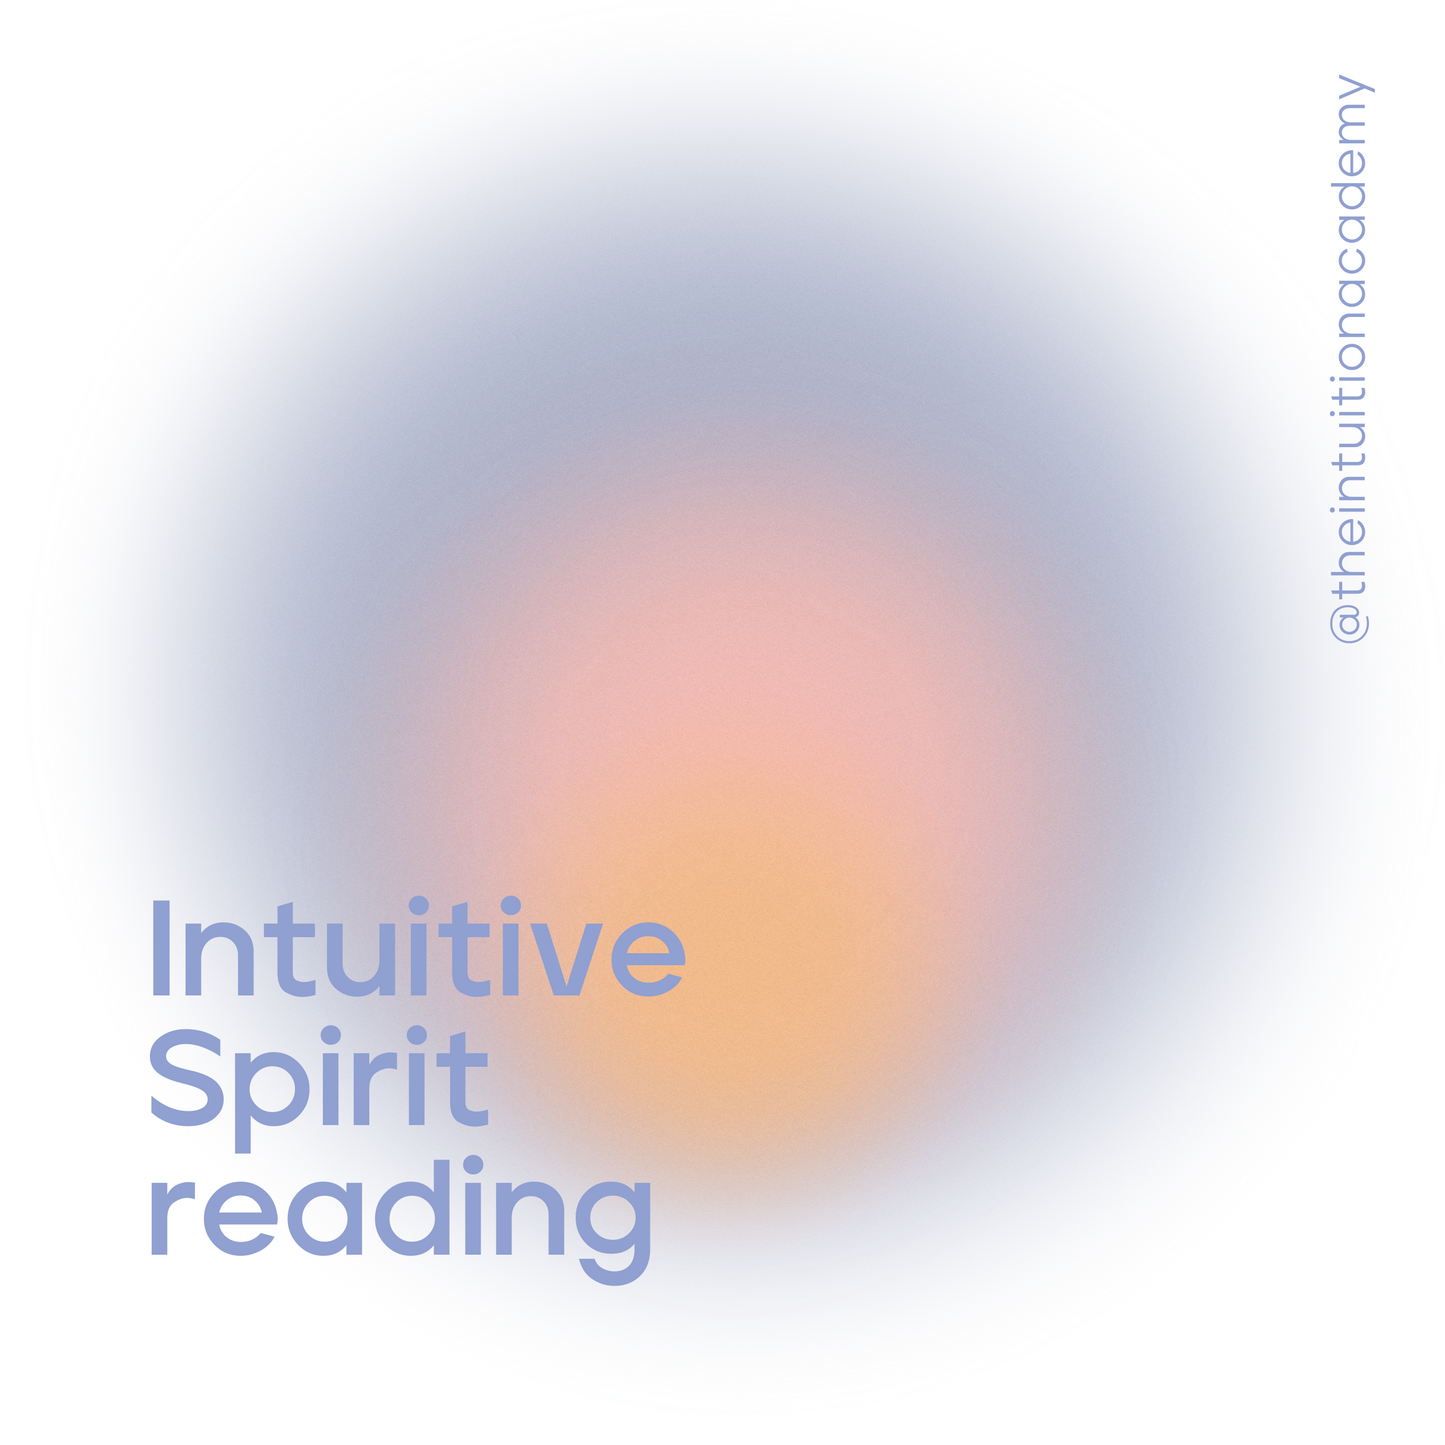 Intuitive Spirit reading